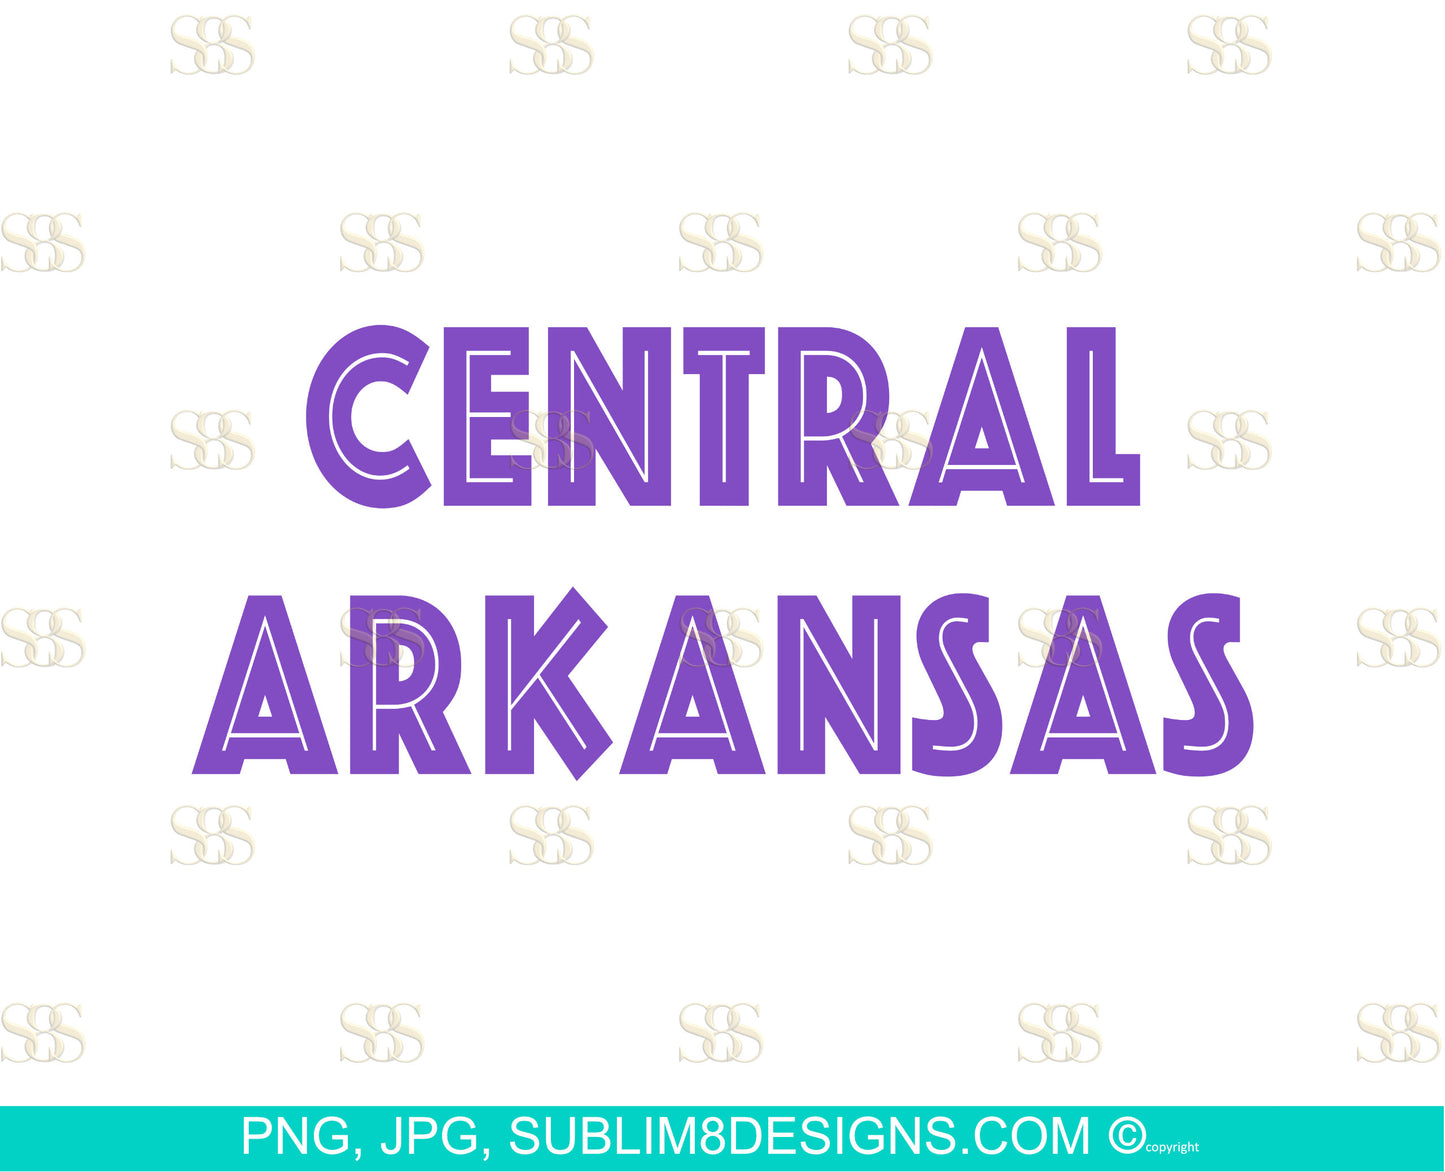 Central Arkansas